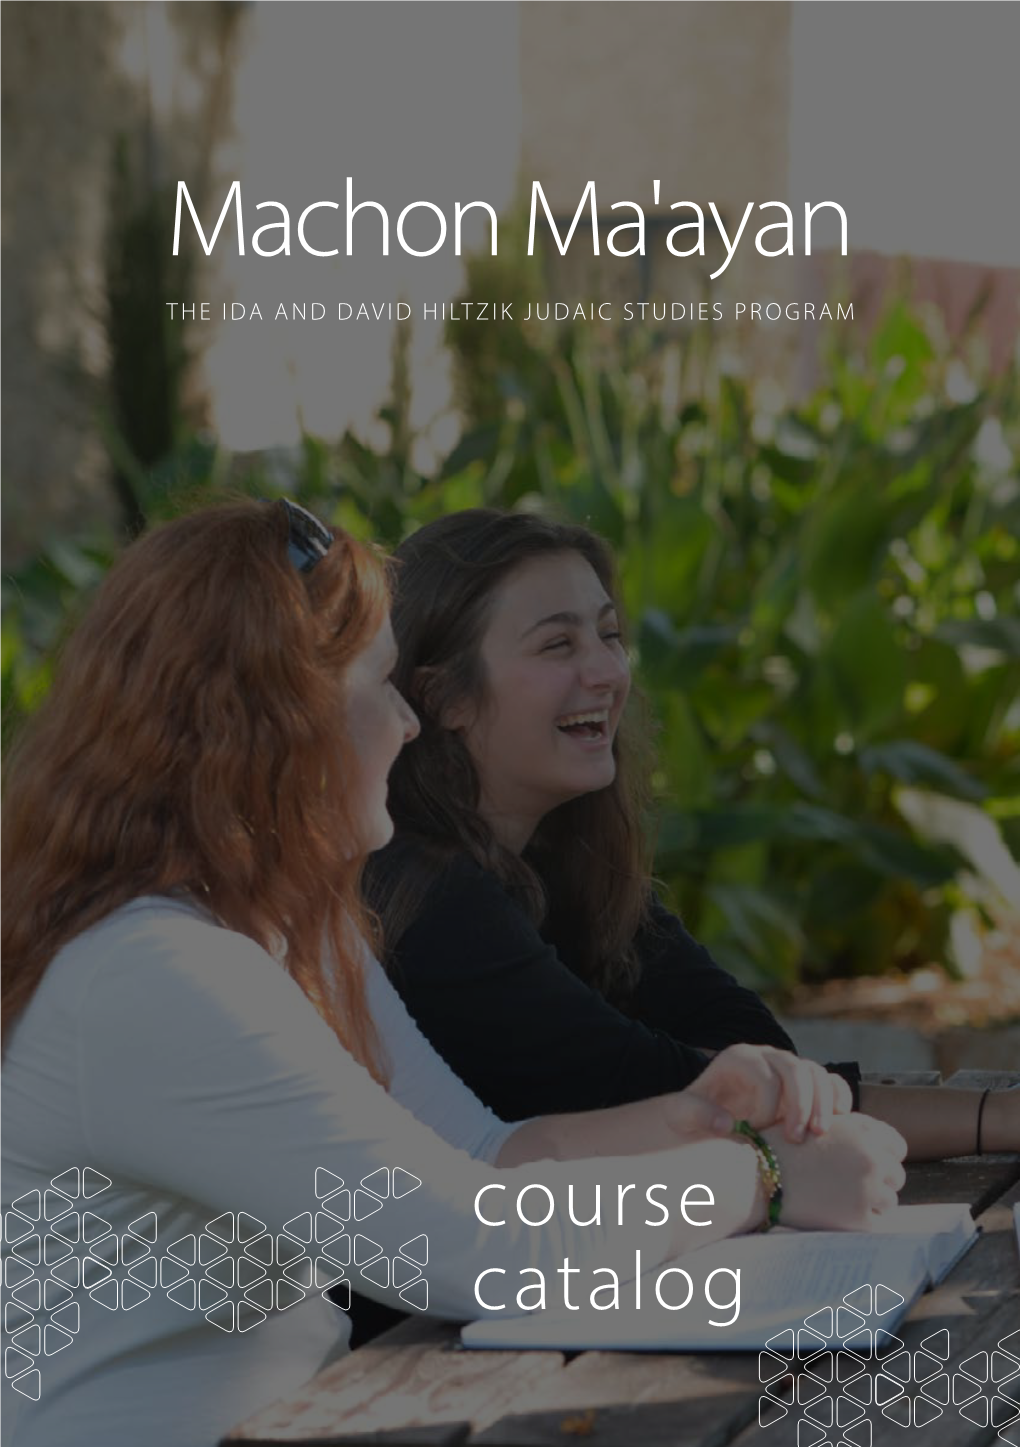 Machon Ma'ayan the IDA and DAVID HILTZIK JUDAIC STUDIES PROGRAM